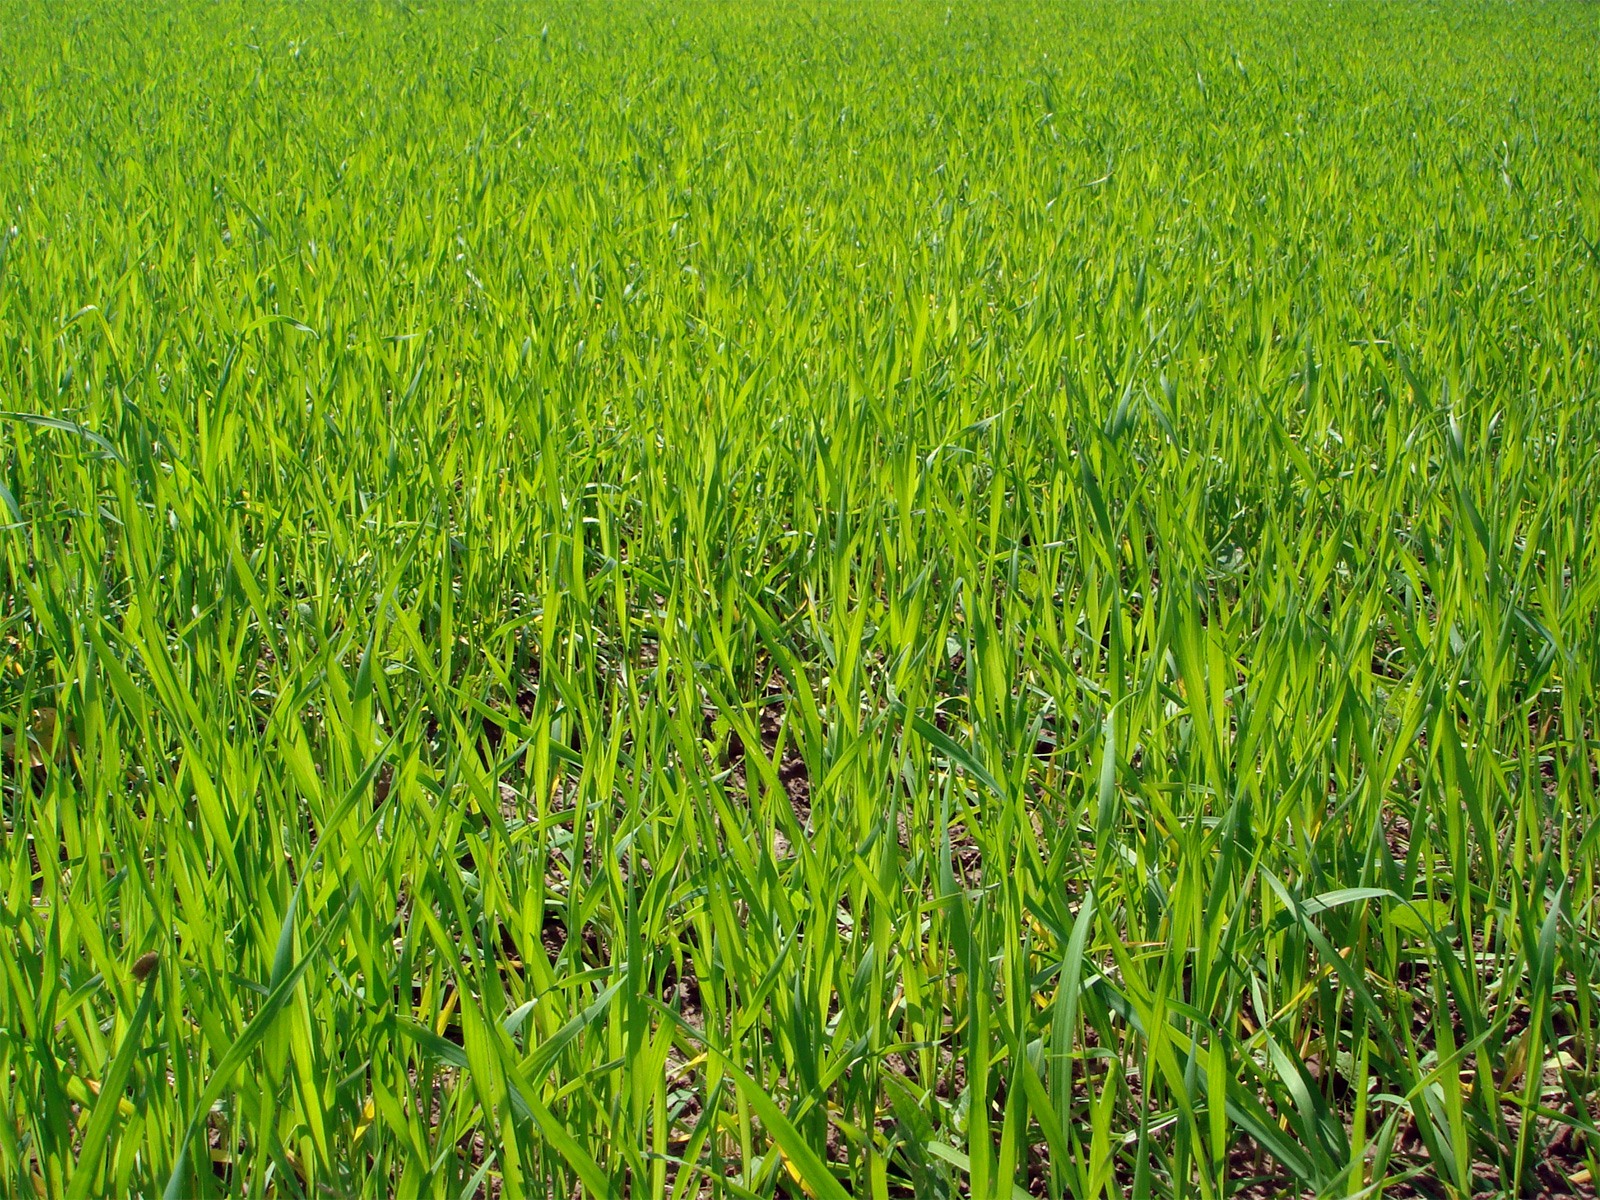 Field of doob grass